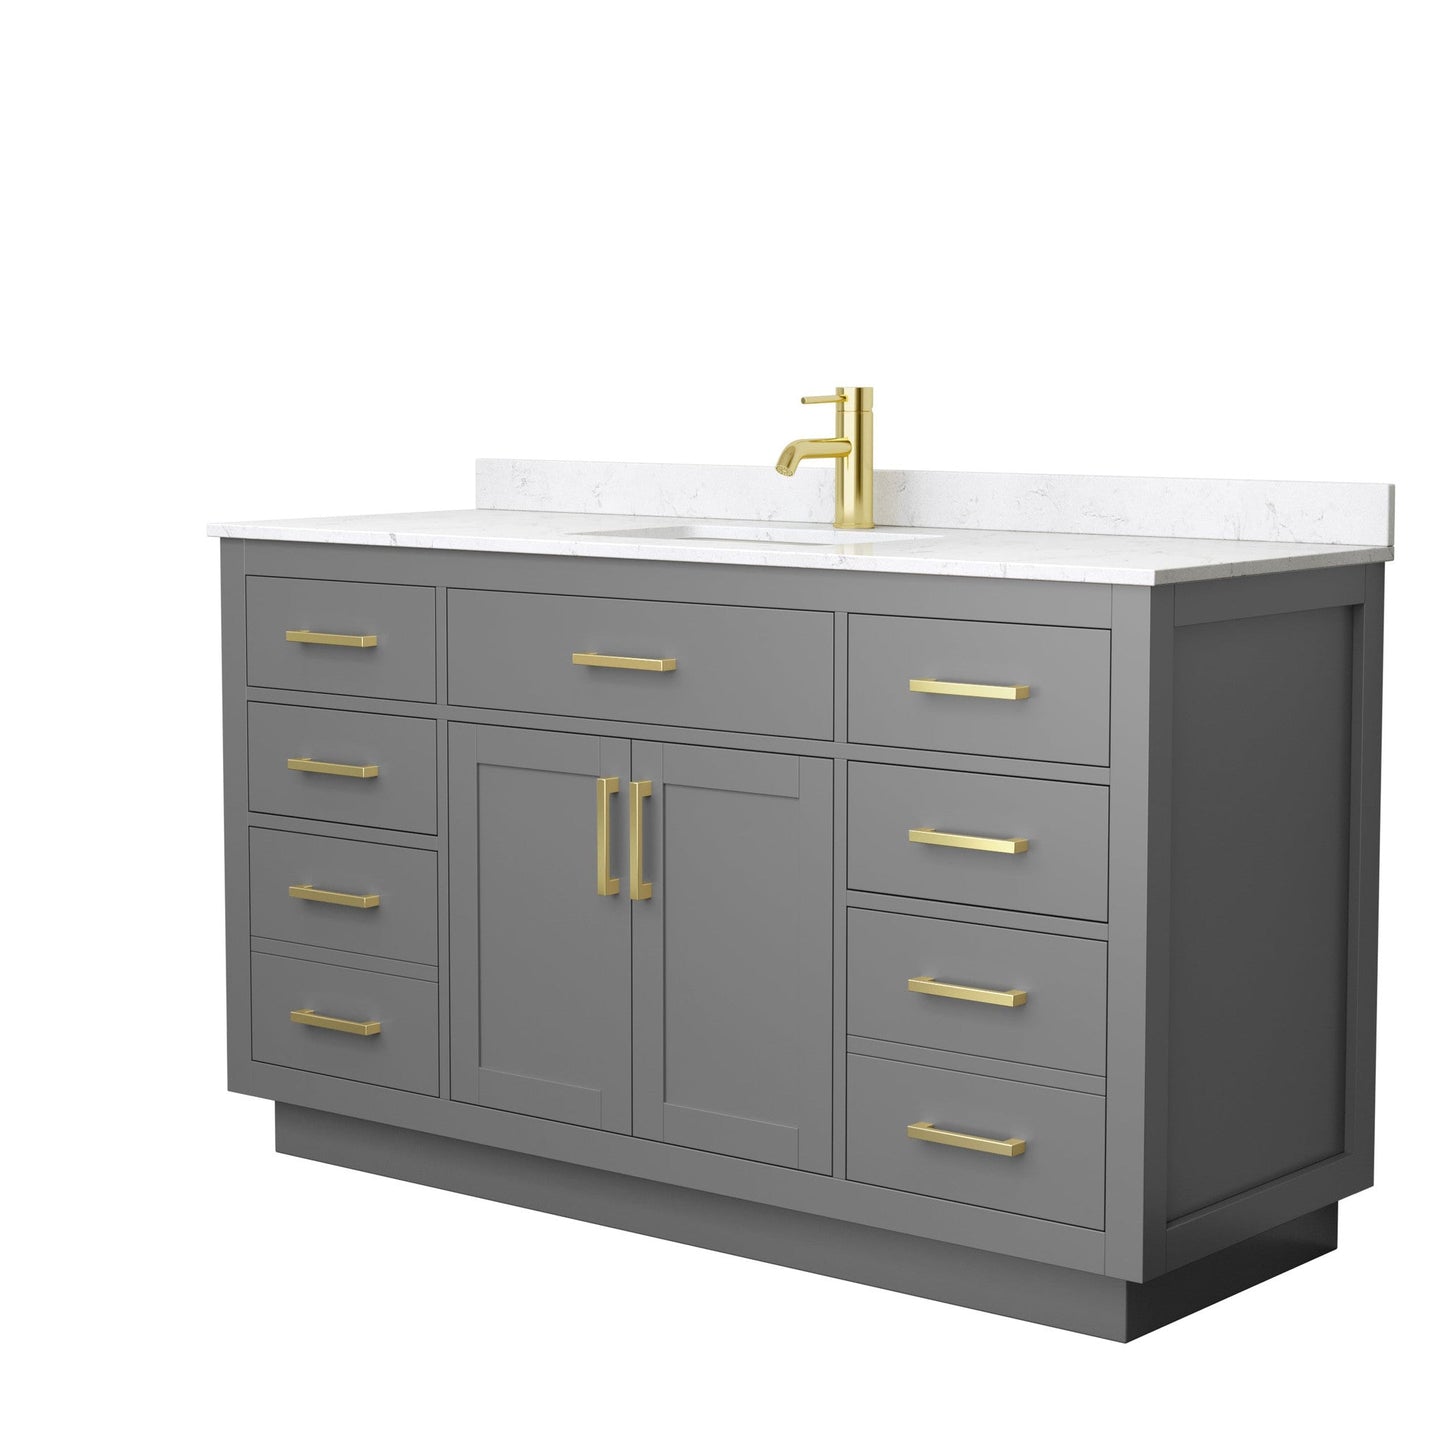 Beckett 60" Single Bathroom Vanity With Toe Kick in Dark Gray, Carrara Cultured Marble Countertop, Undermount Square Sink, Brushed Gold Trim